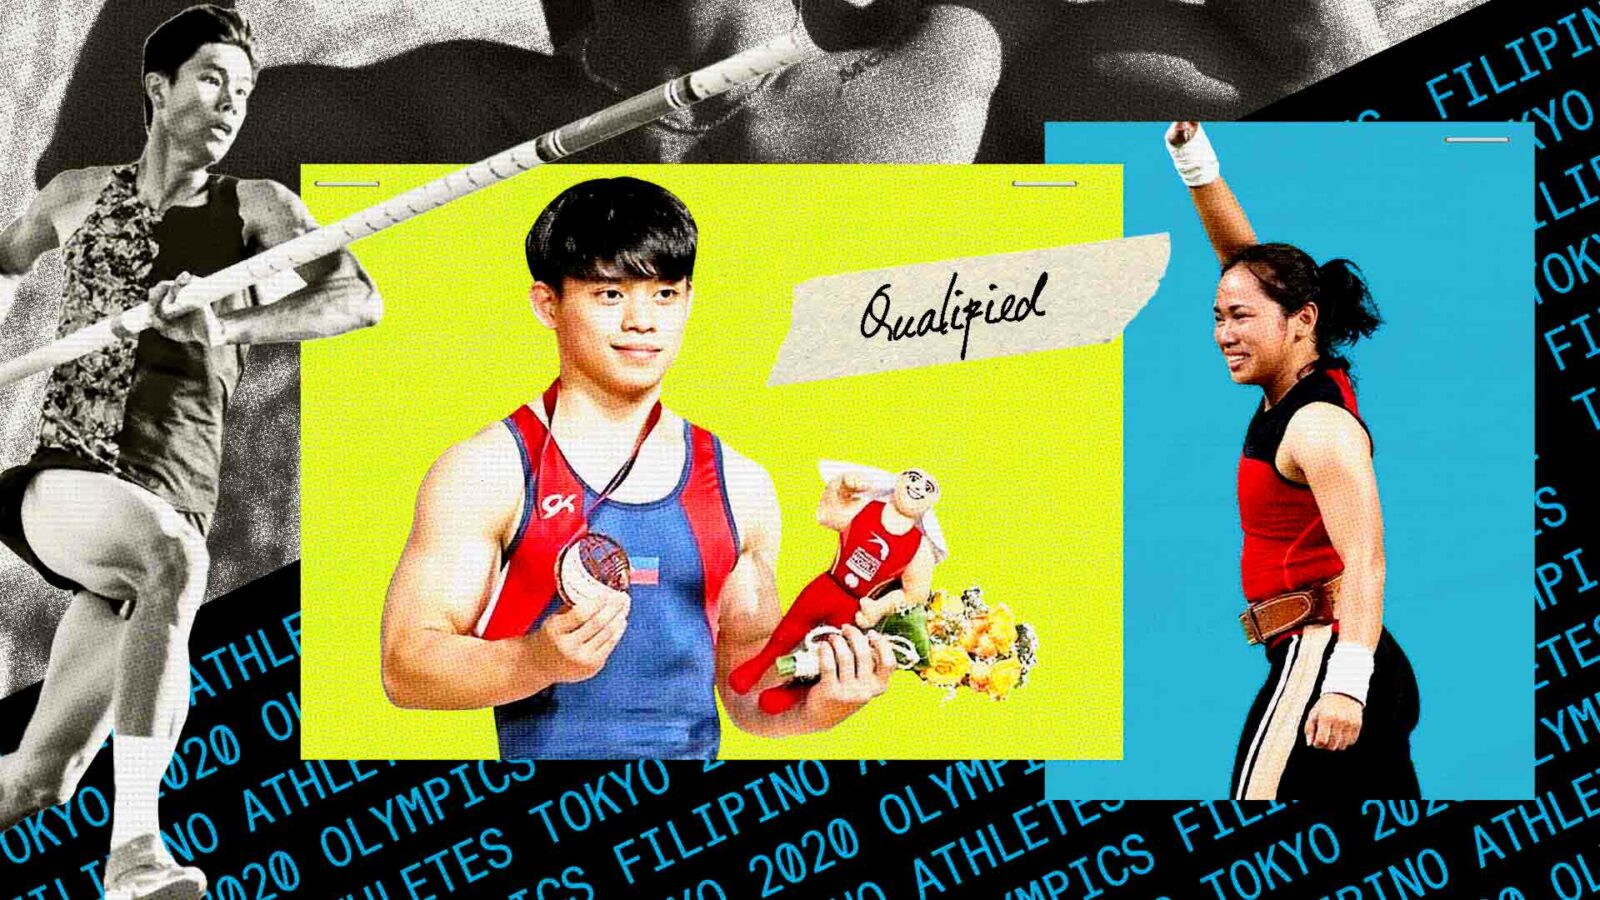 Carlos Yulo Filipino Athlete Tokyo 2021 Olympics